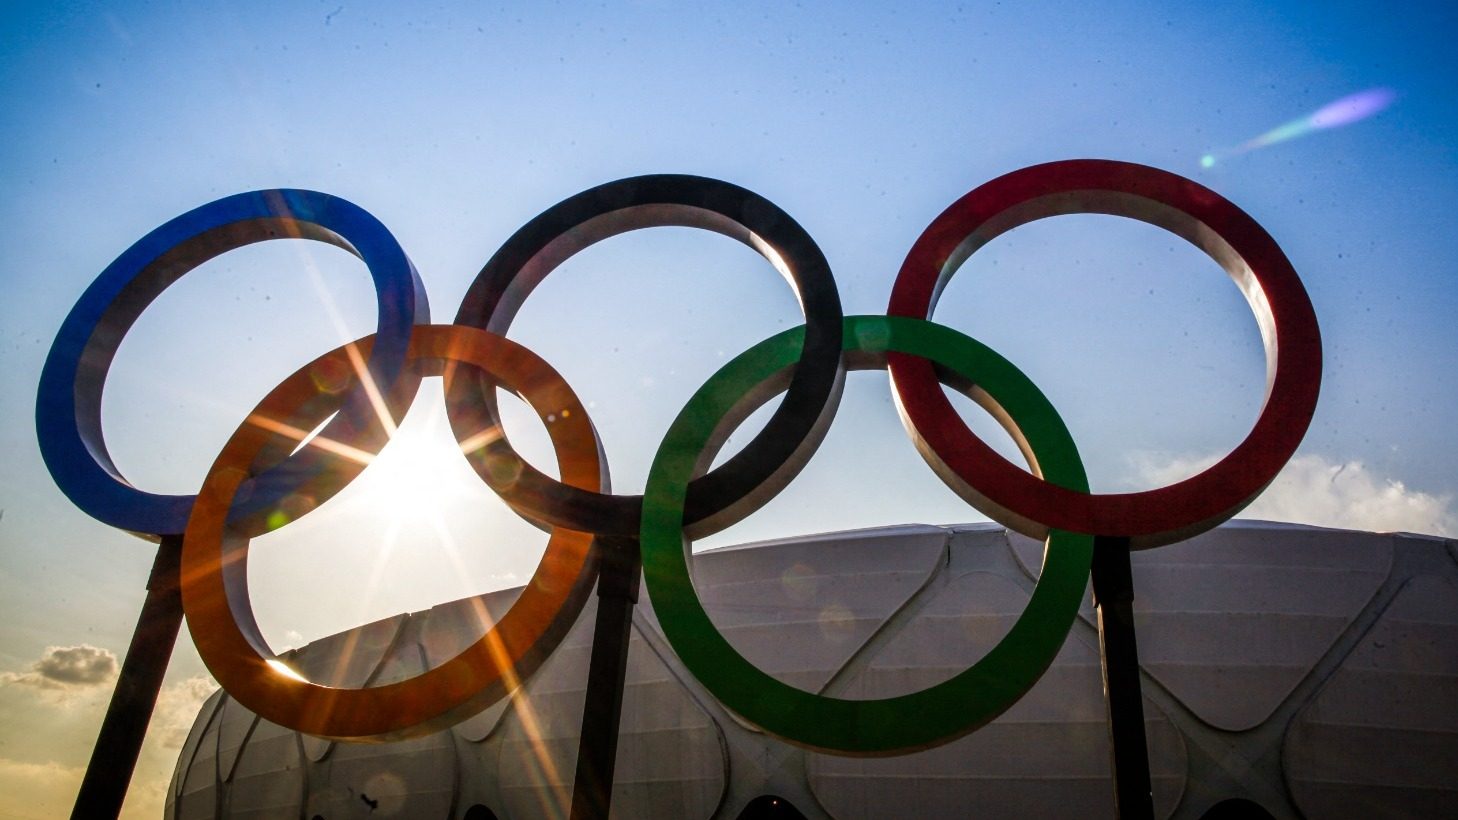 Brisbane 2032: International Olympic Committee confirm Brisbane as